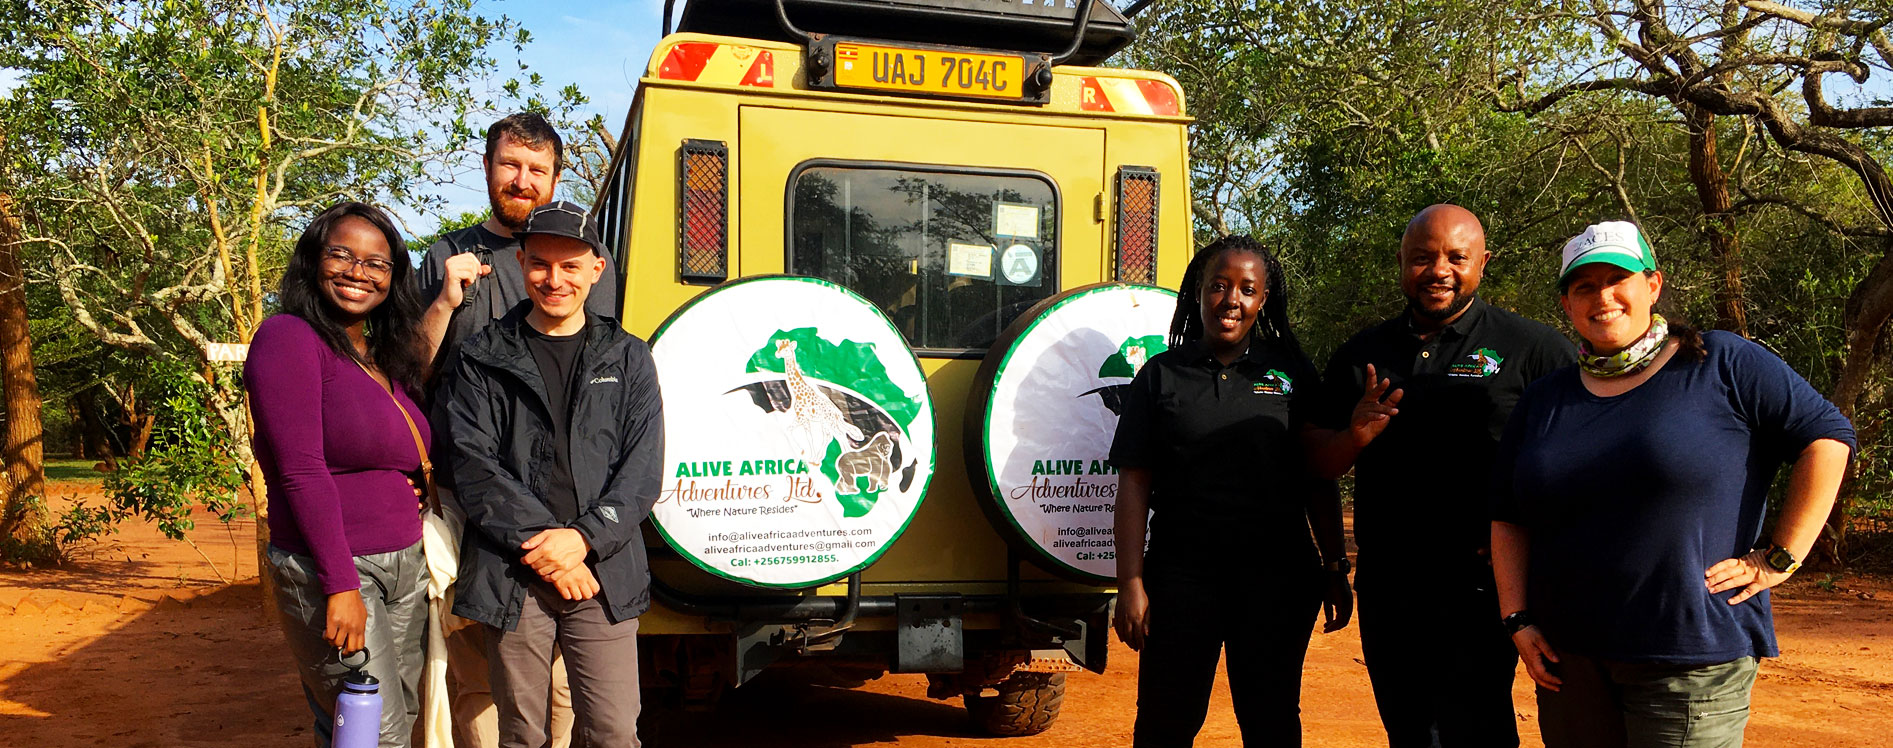 uganda-safari-tours-by-alive-africa-adventures